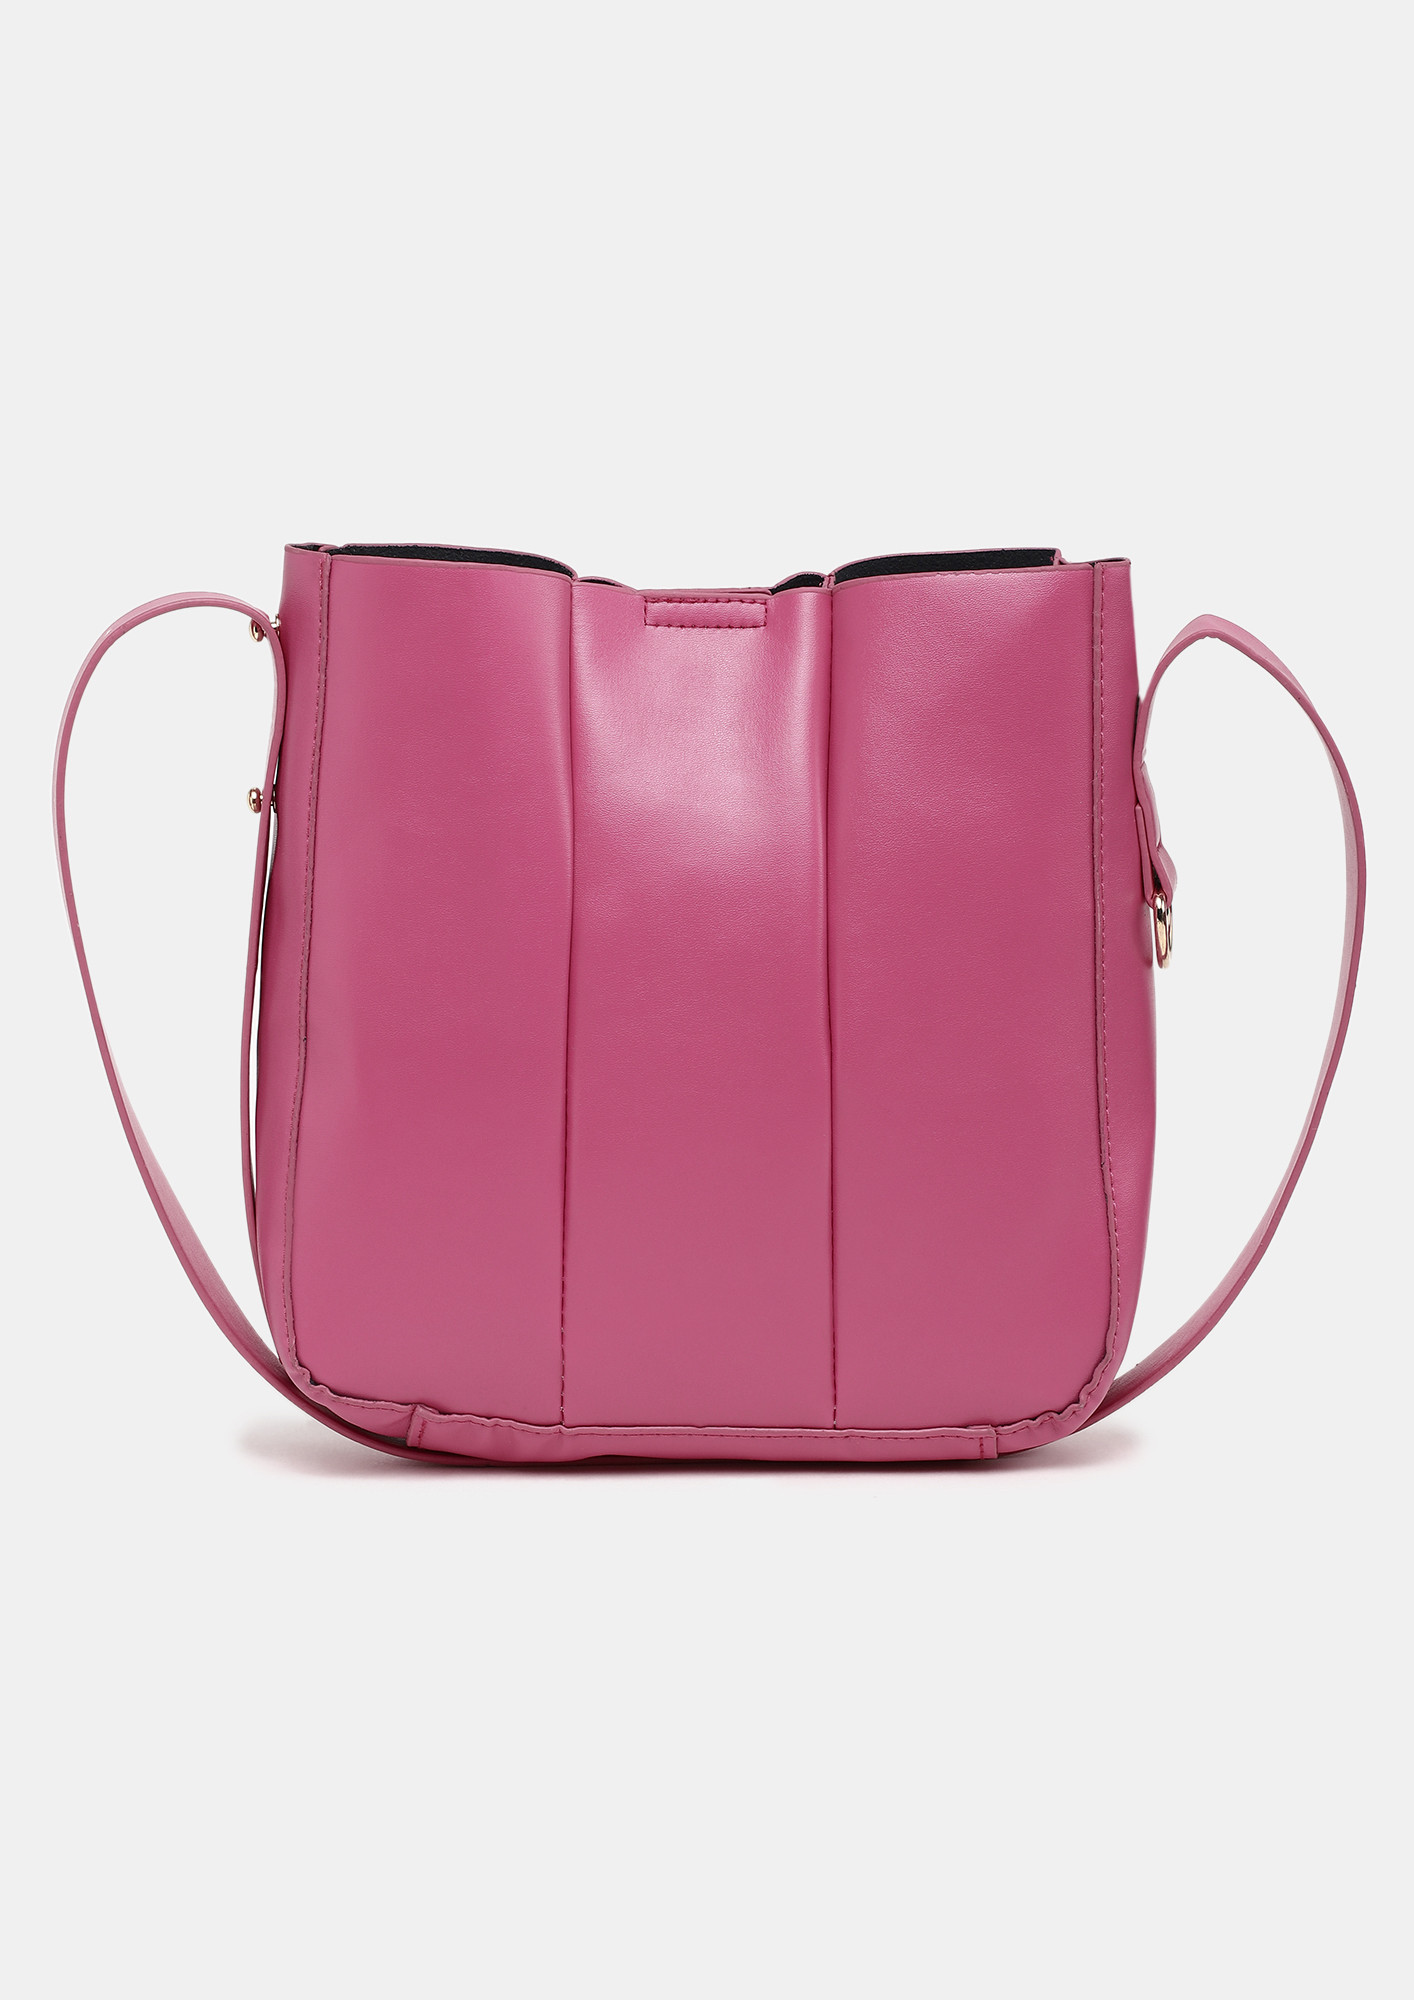 Buy Women's Leather Tote Bag Crossbody Bag Online in India 